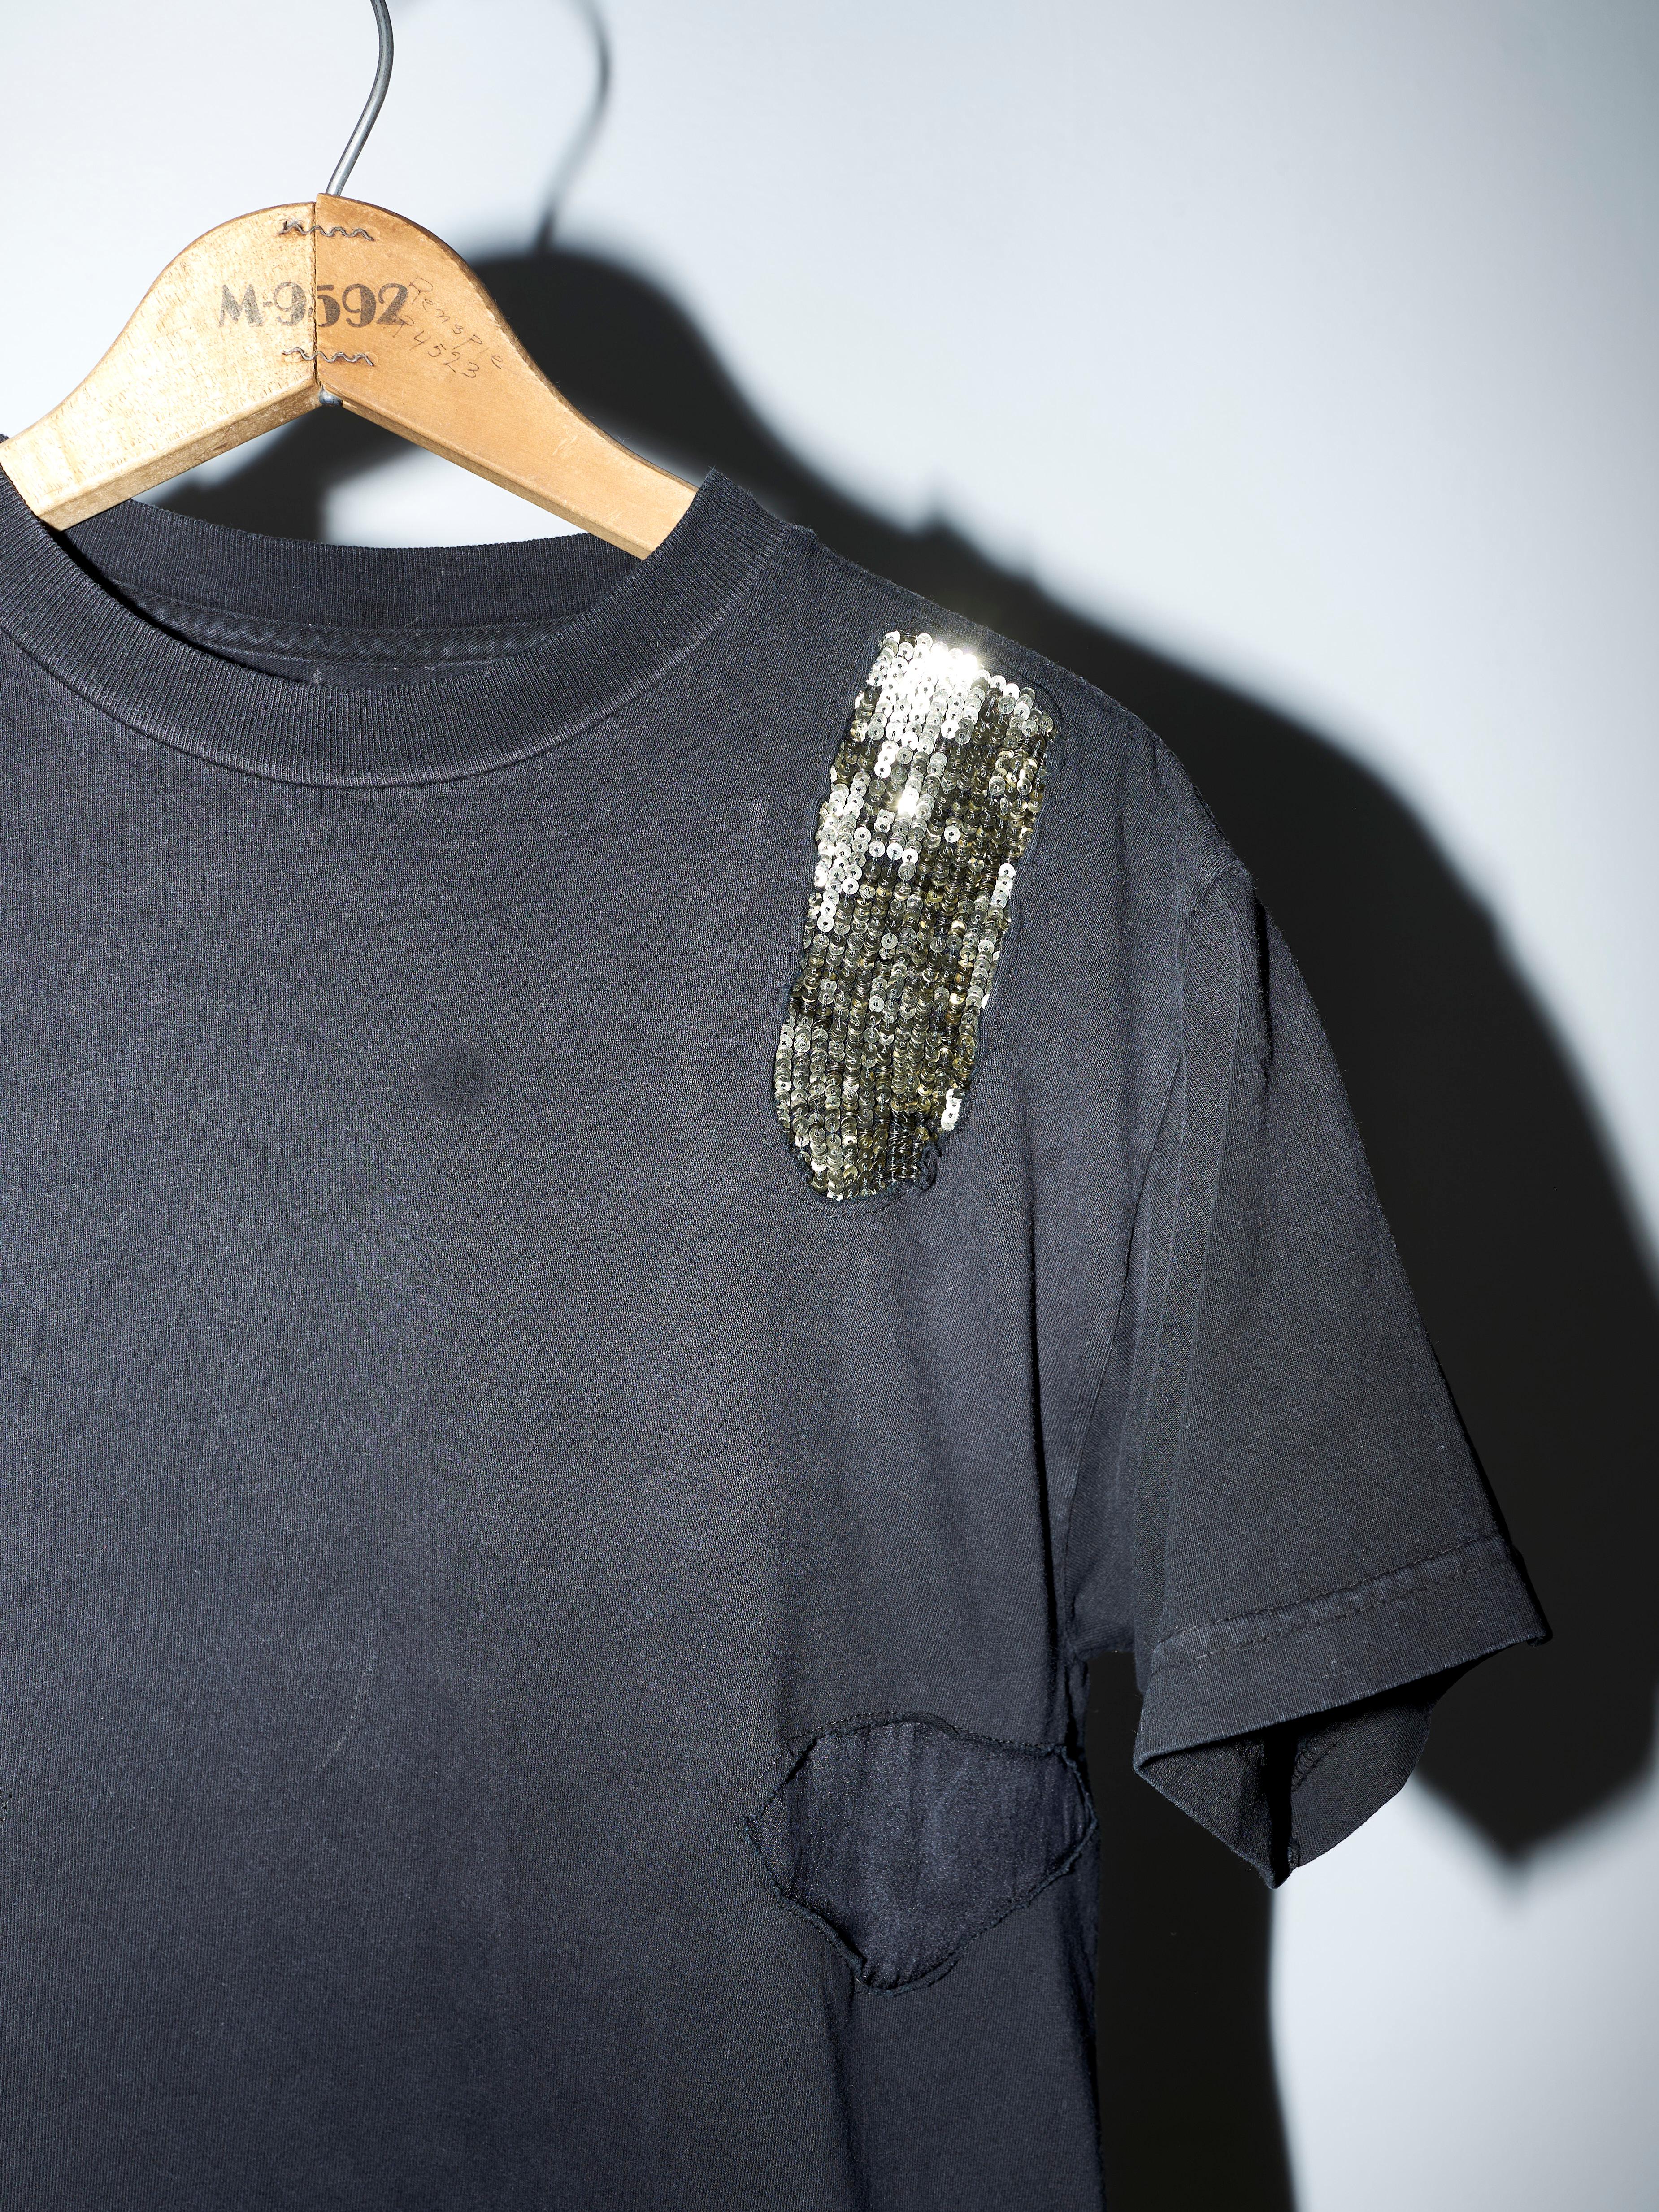 J Dauphin Black T-Shirt Embellished  Patch Work Sequin Silk Body Cotton  11